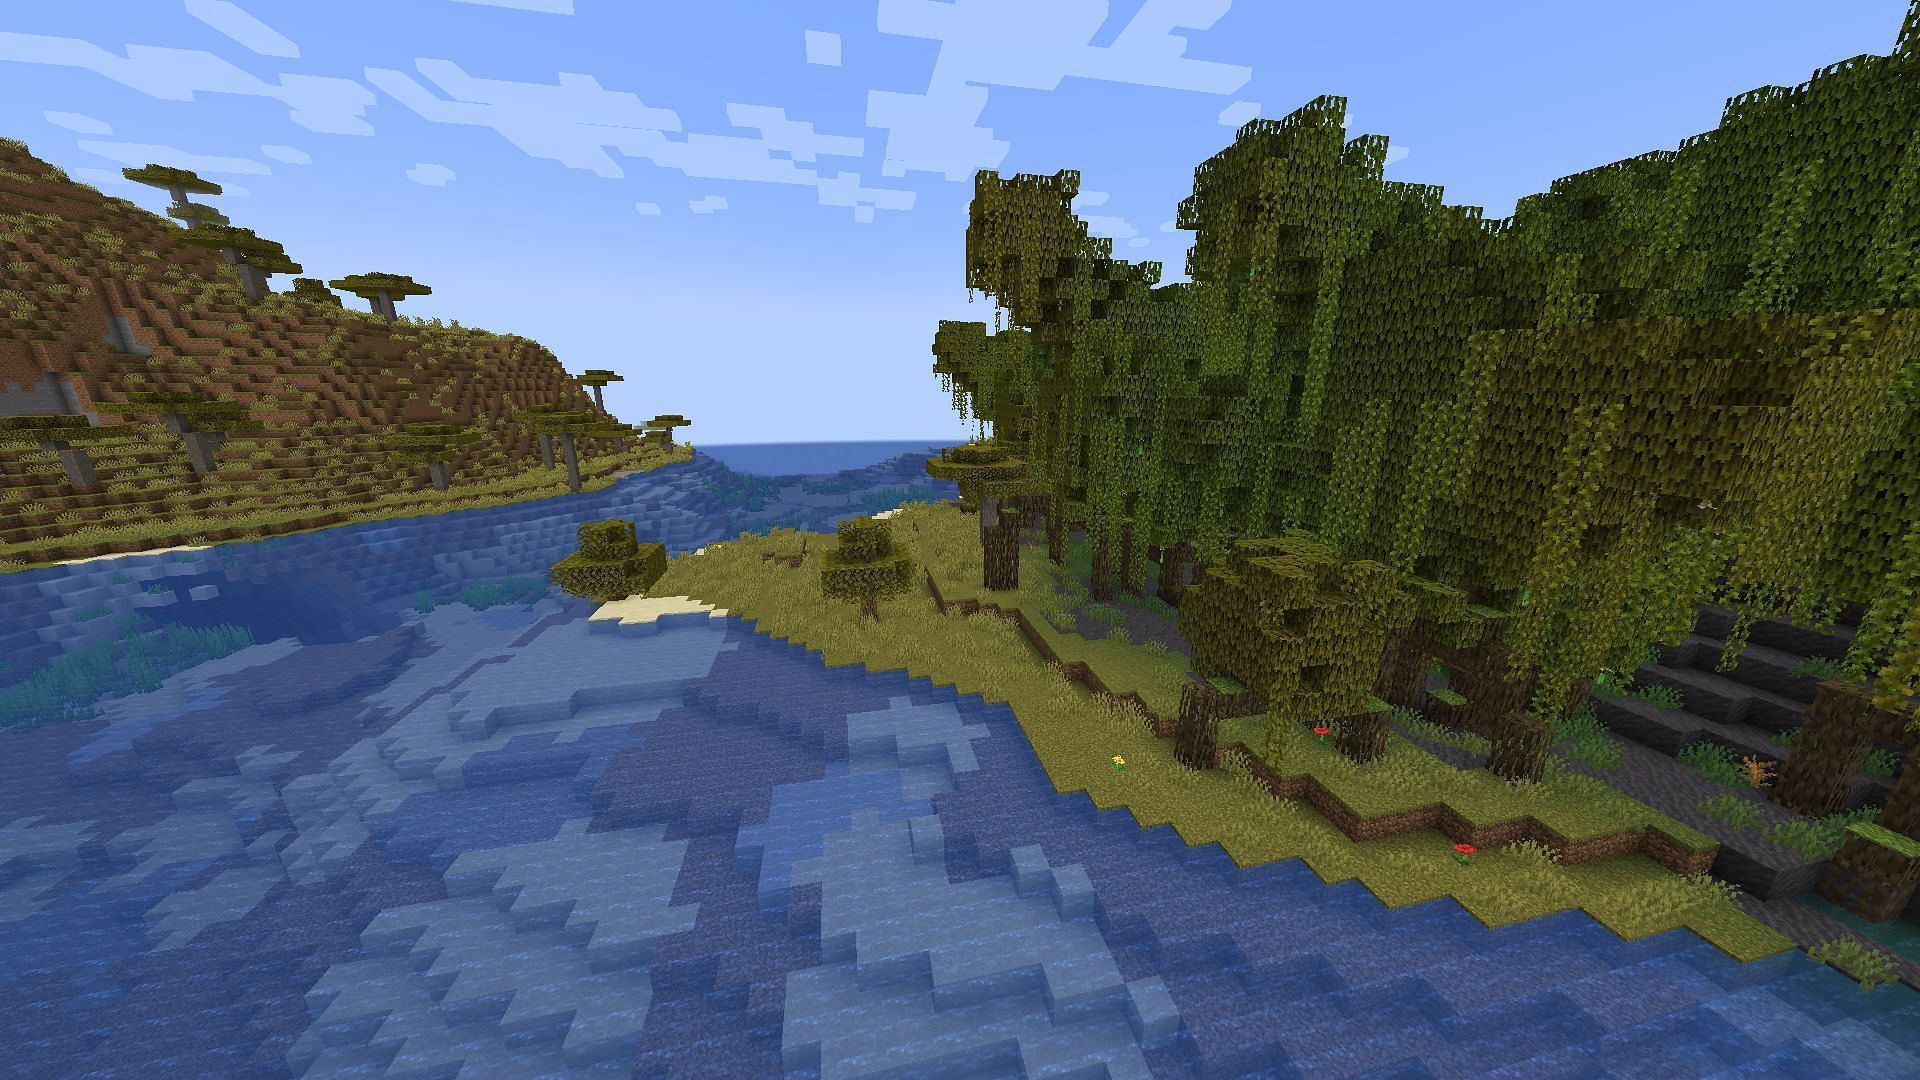 Small mangrove swamp area near Savanna biome and mountain in Minecraft (Image via Mojang)